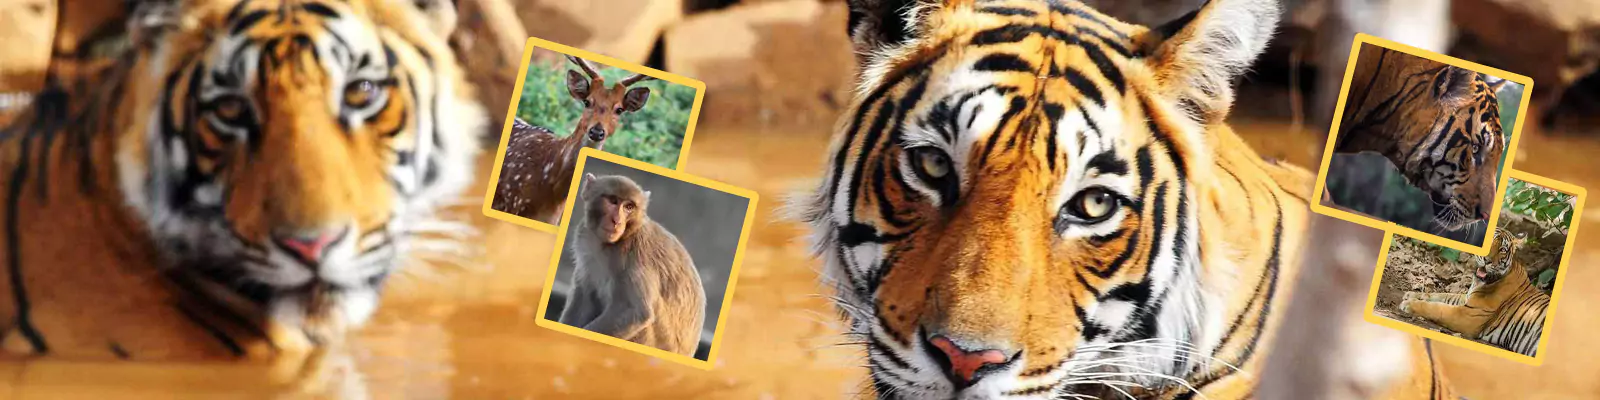 rajasthan wildlife tour package